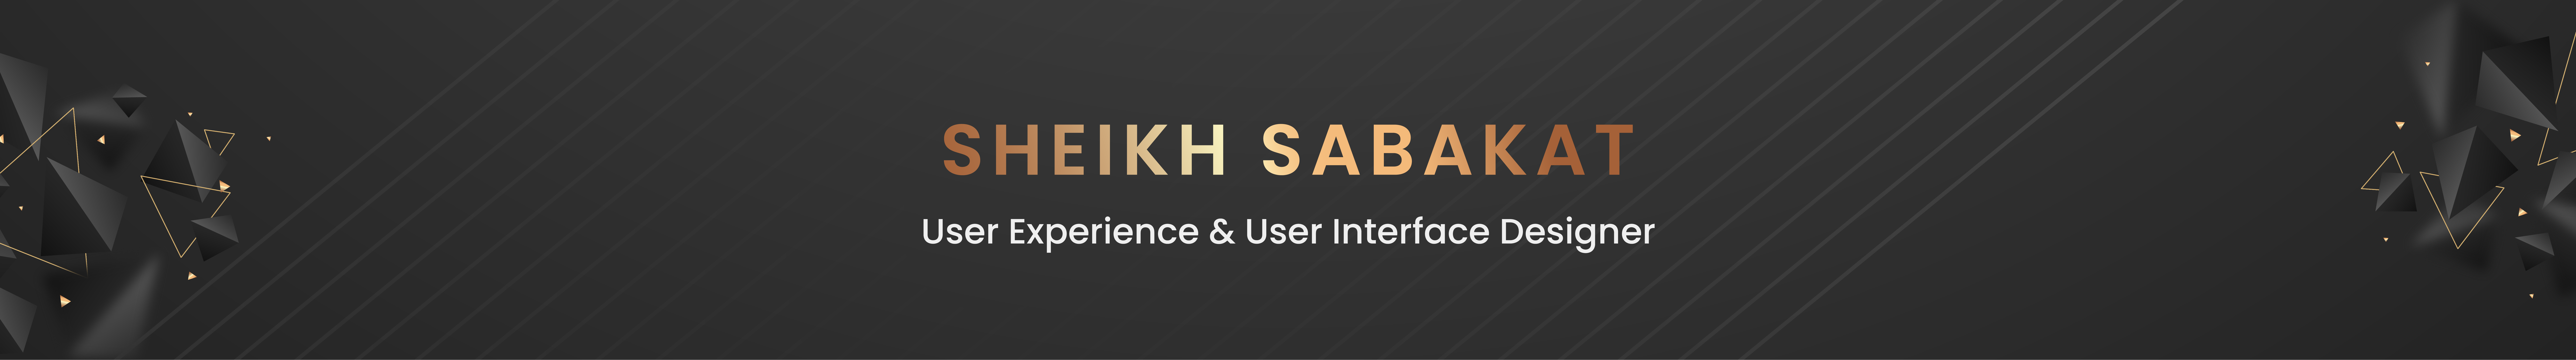 Sheikh Sabakat's profile banner